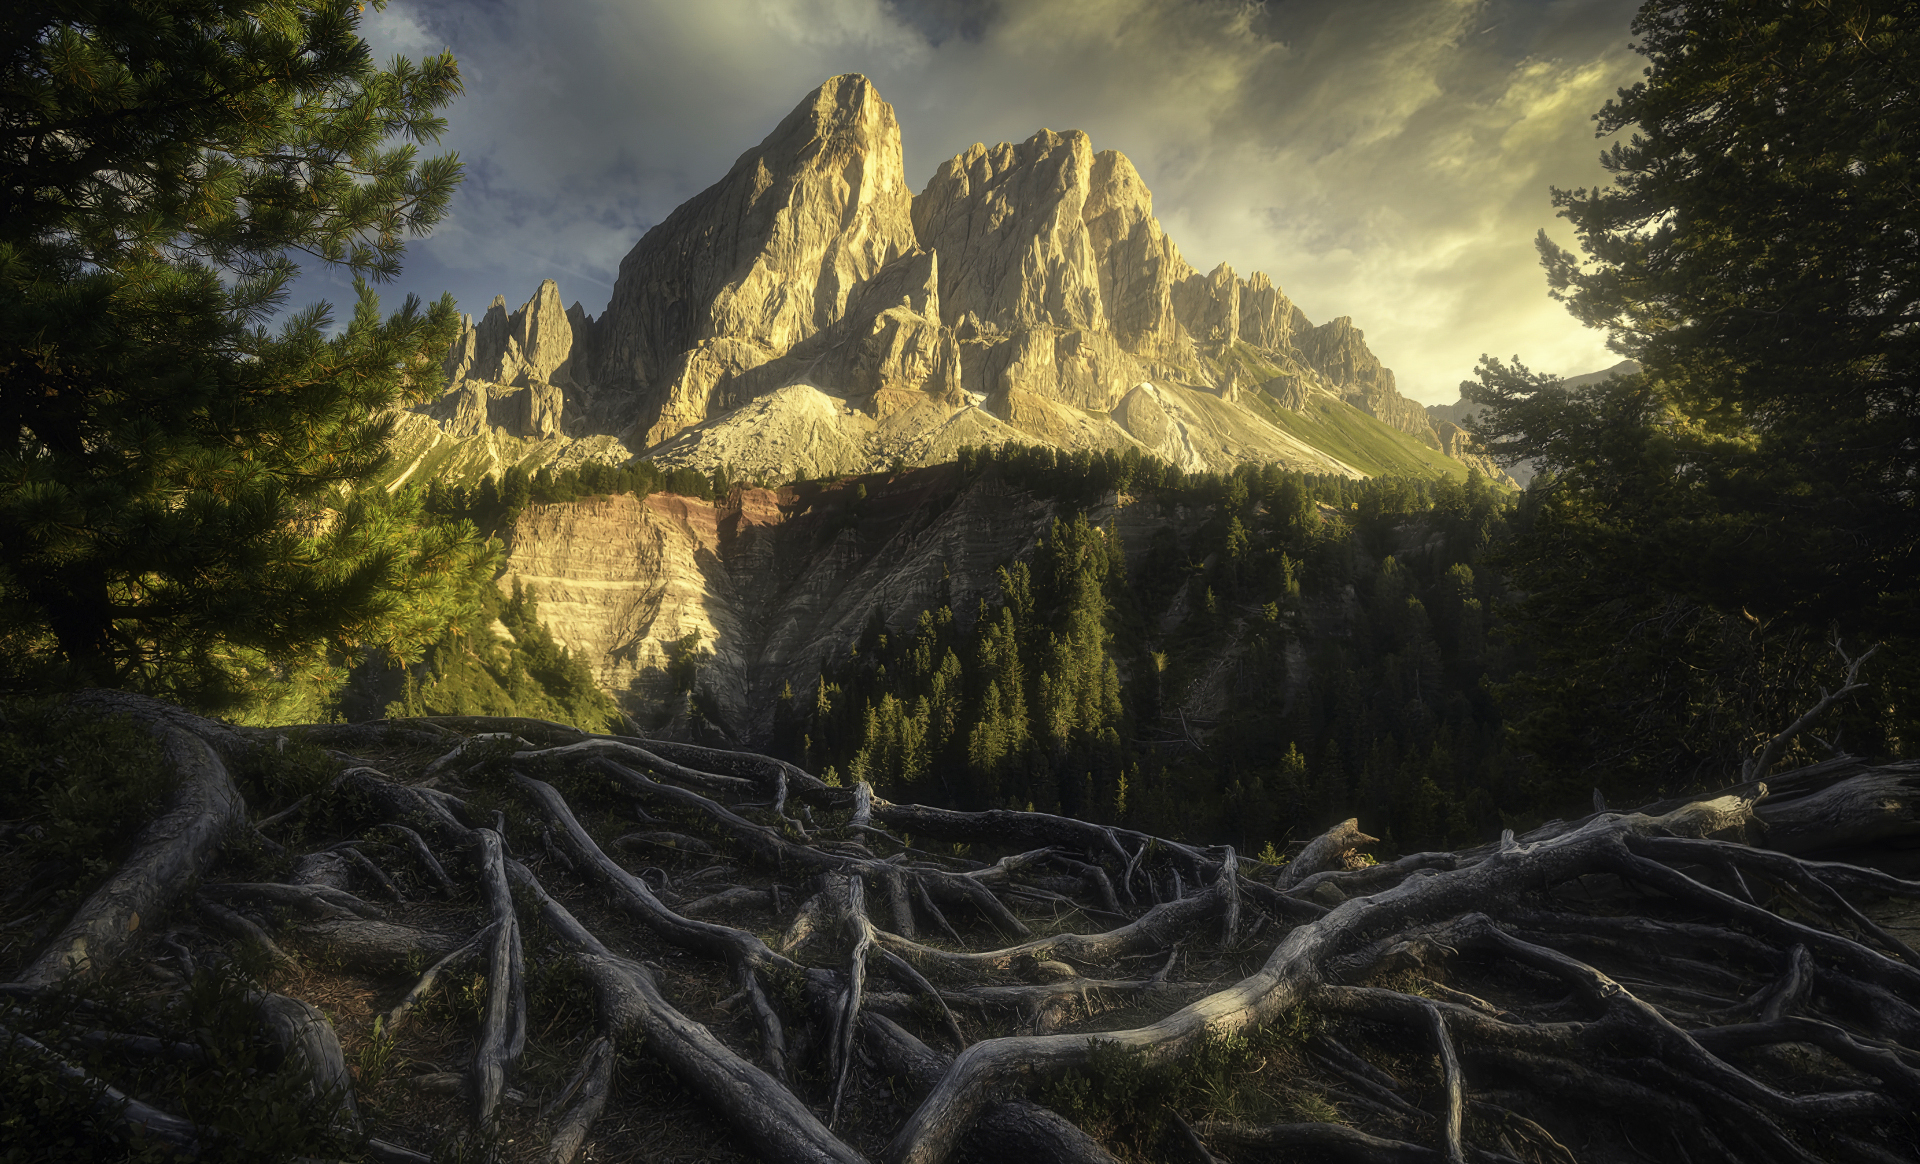 497506 descargar imagen tierra/naturaleza, montaña, paisaje, raíces, montañas: fondos de pantalla y protectores de pantalla gratis